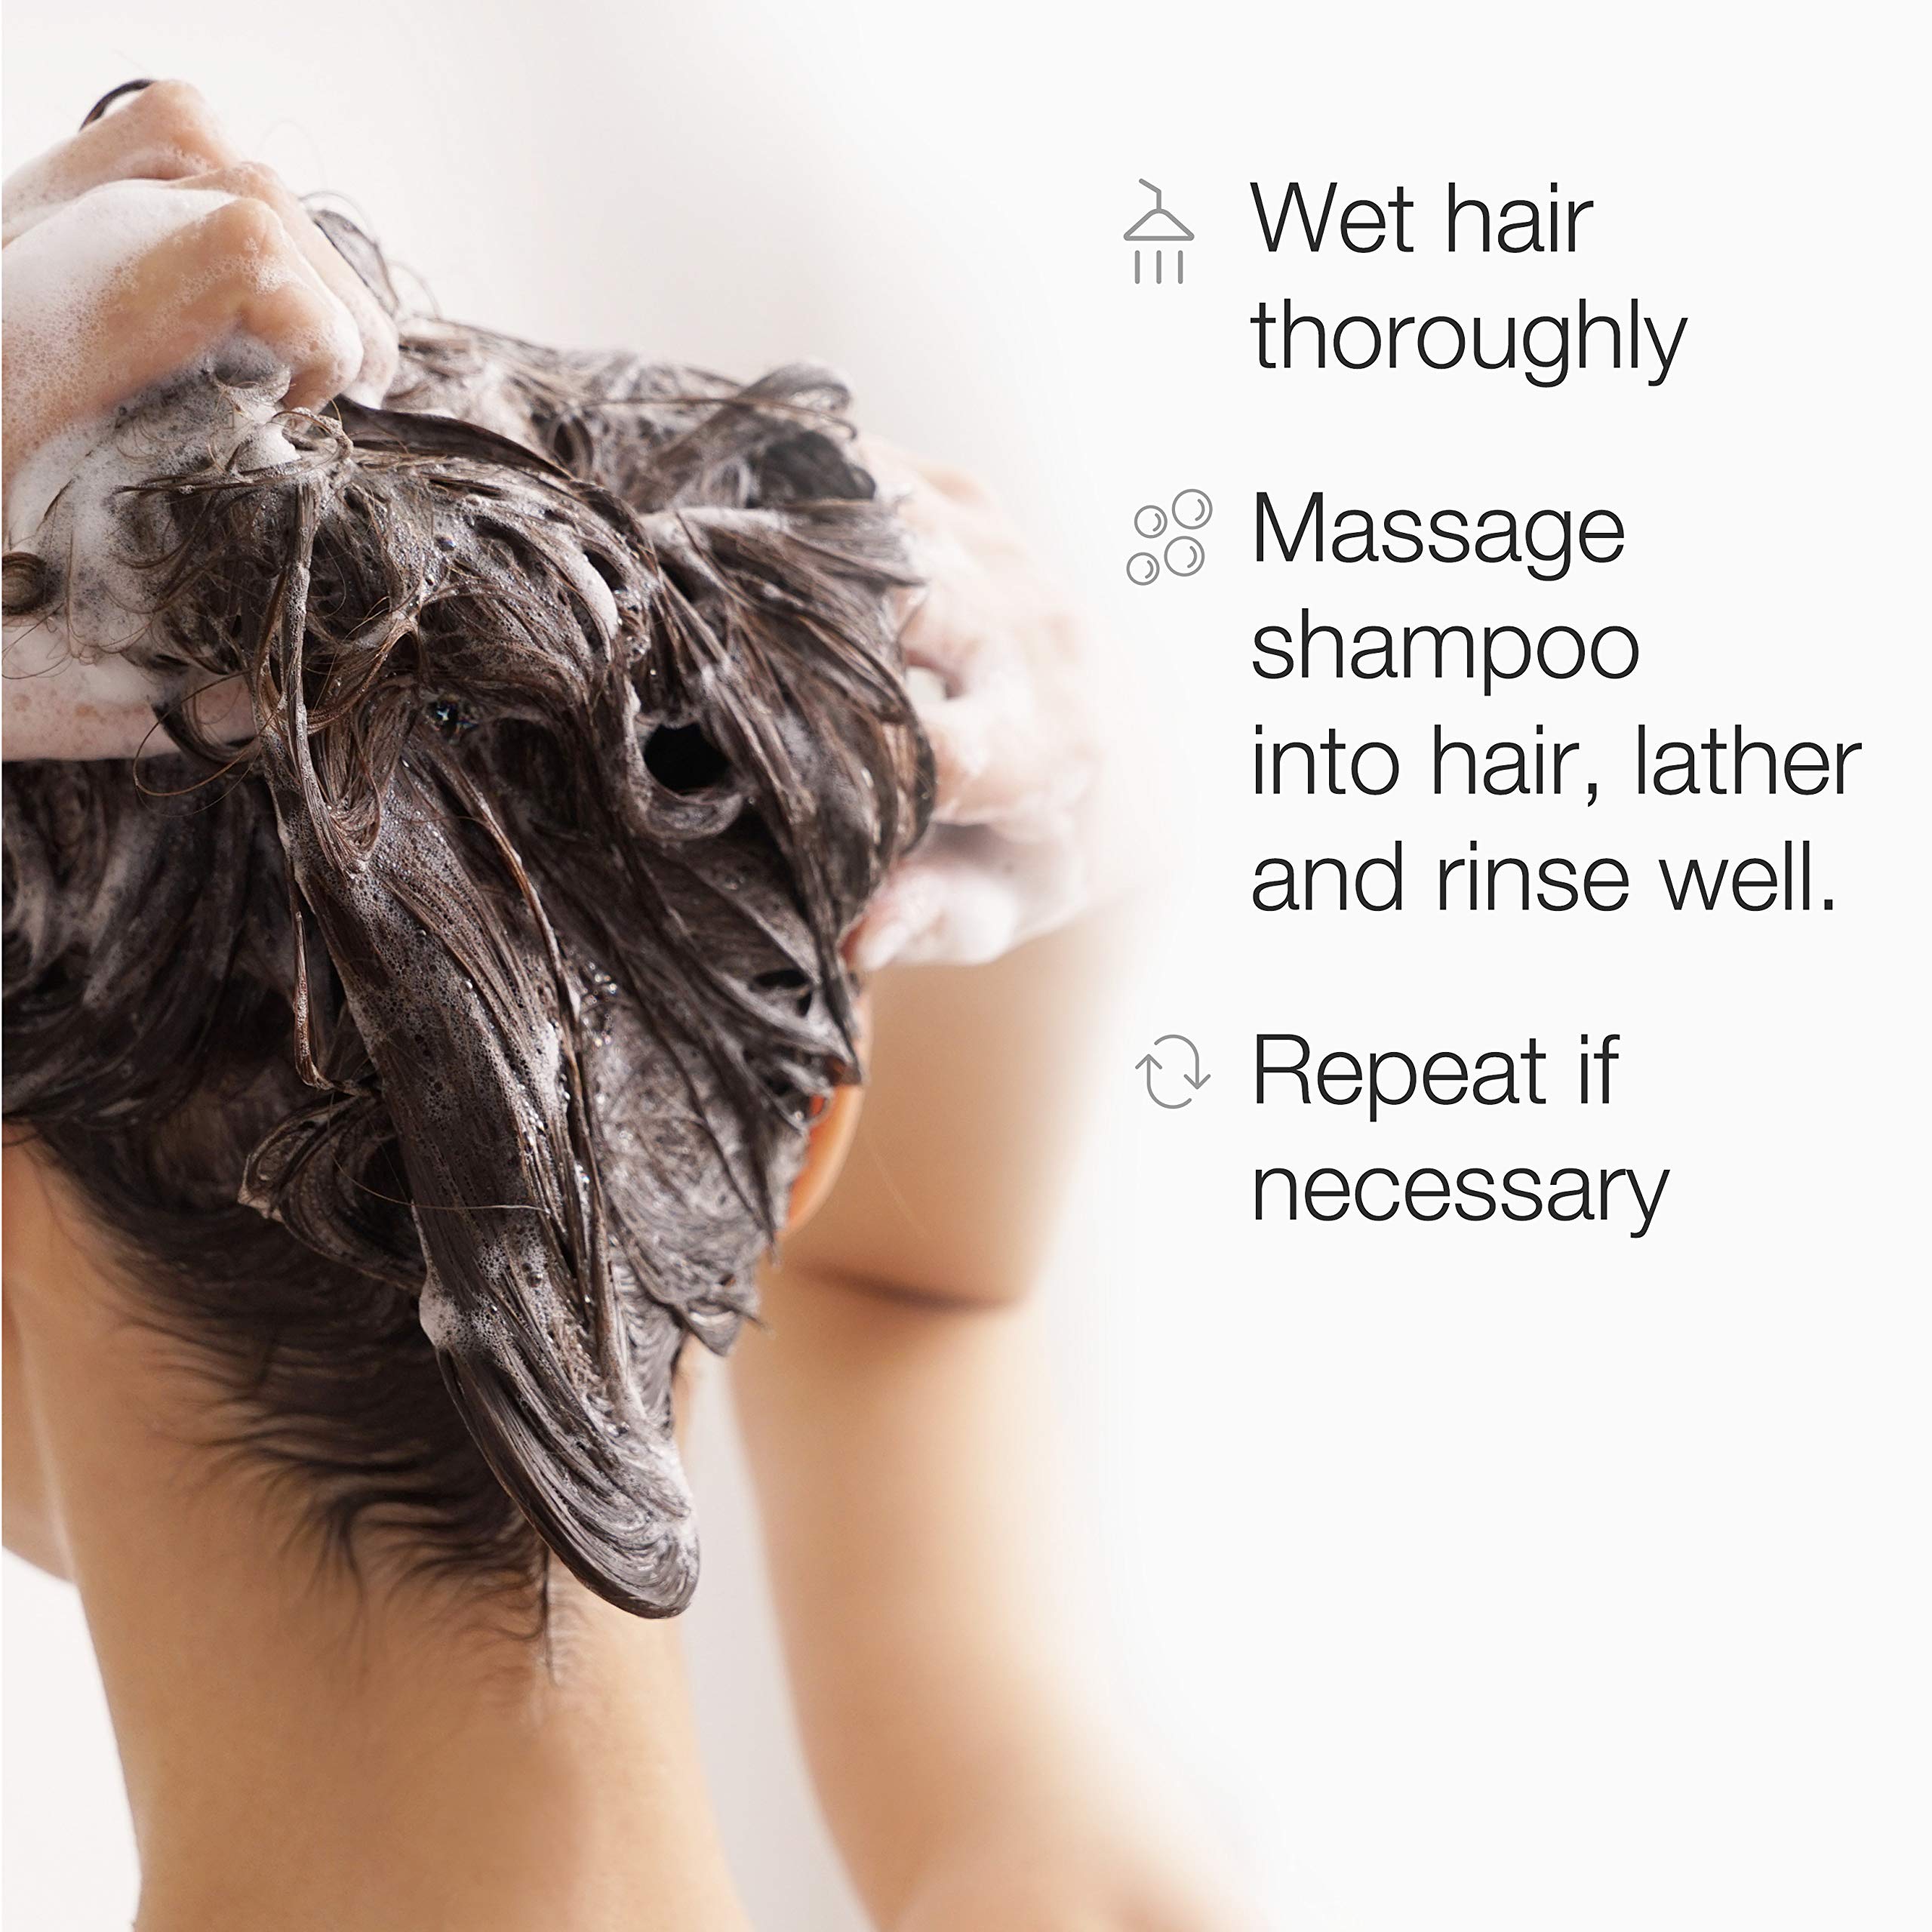 Neutrogena Anti-Residue Clarifying Shampoo, Gentle Non-Irritating Clarifying Shampoo to Remove Hair Build-Up & Residue, 6 Fl Ounce